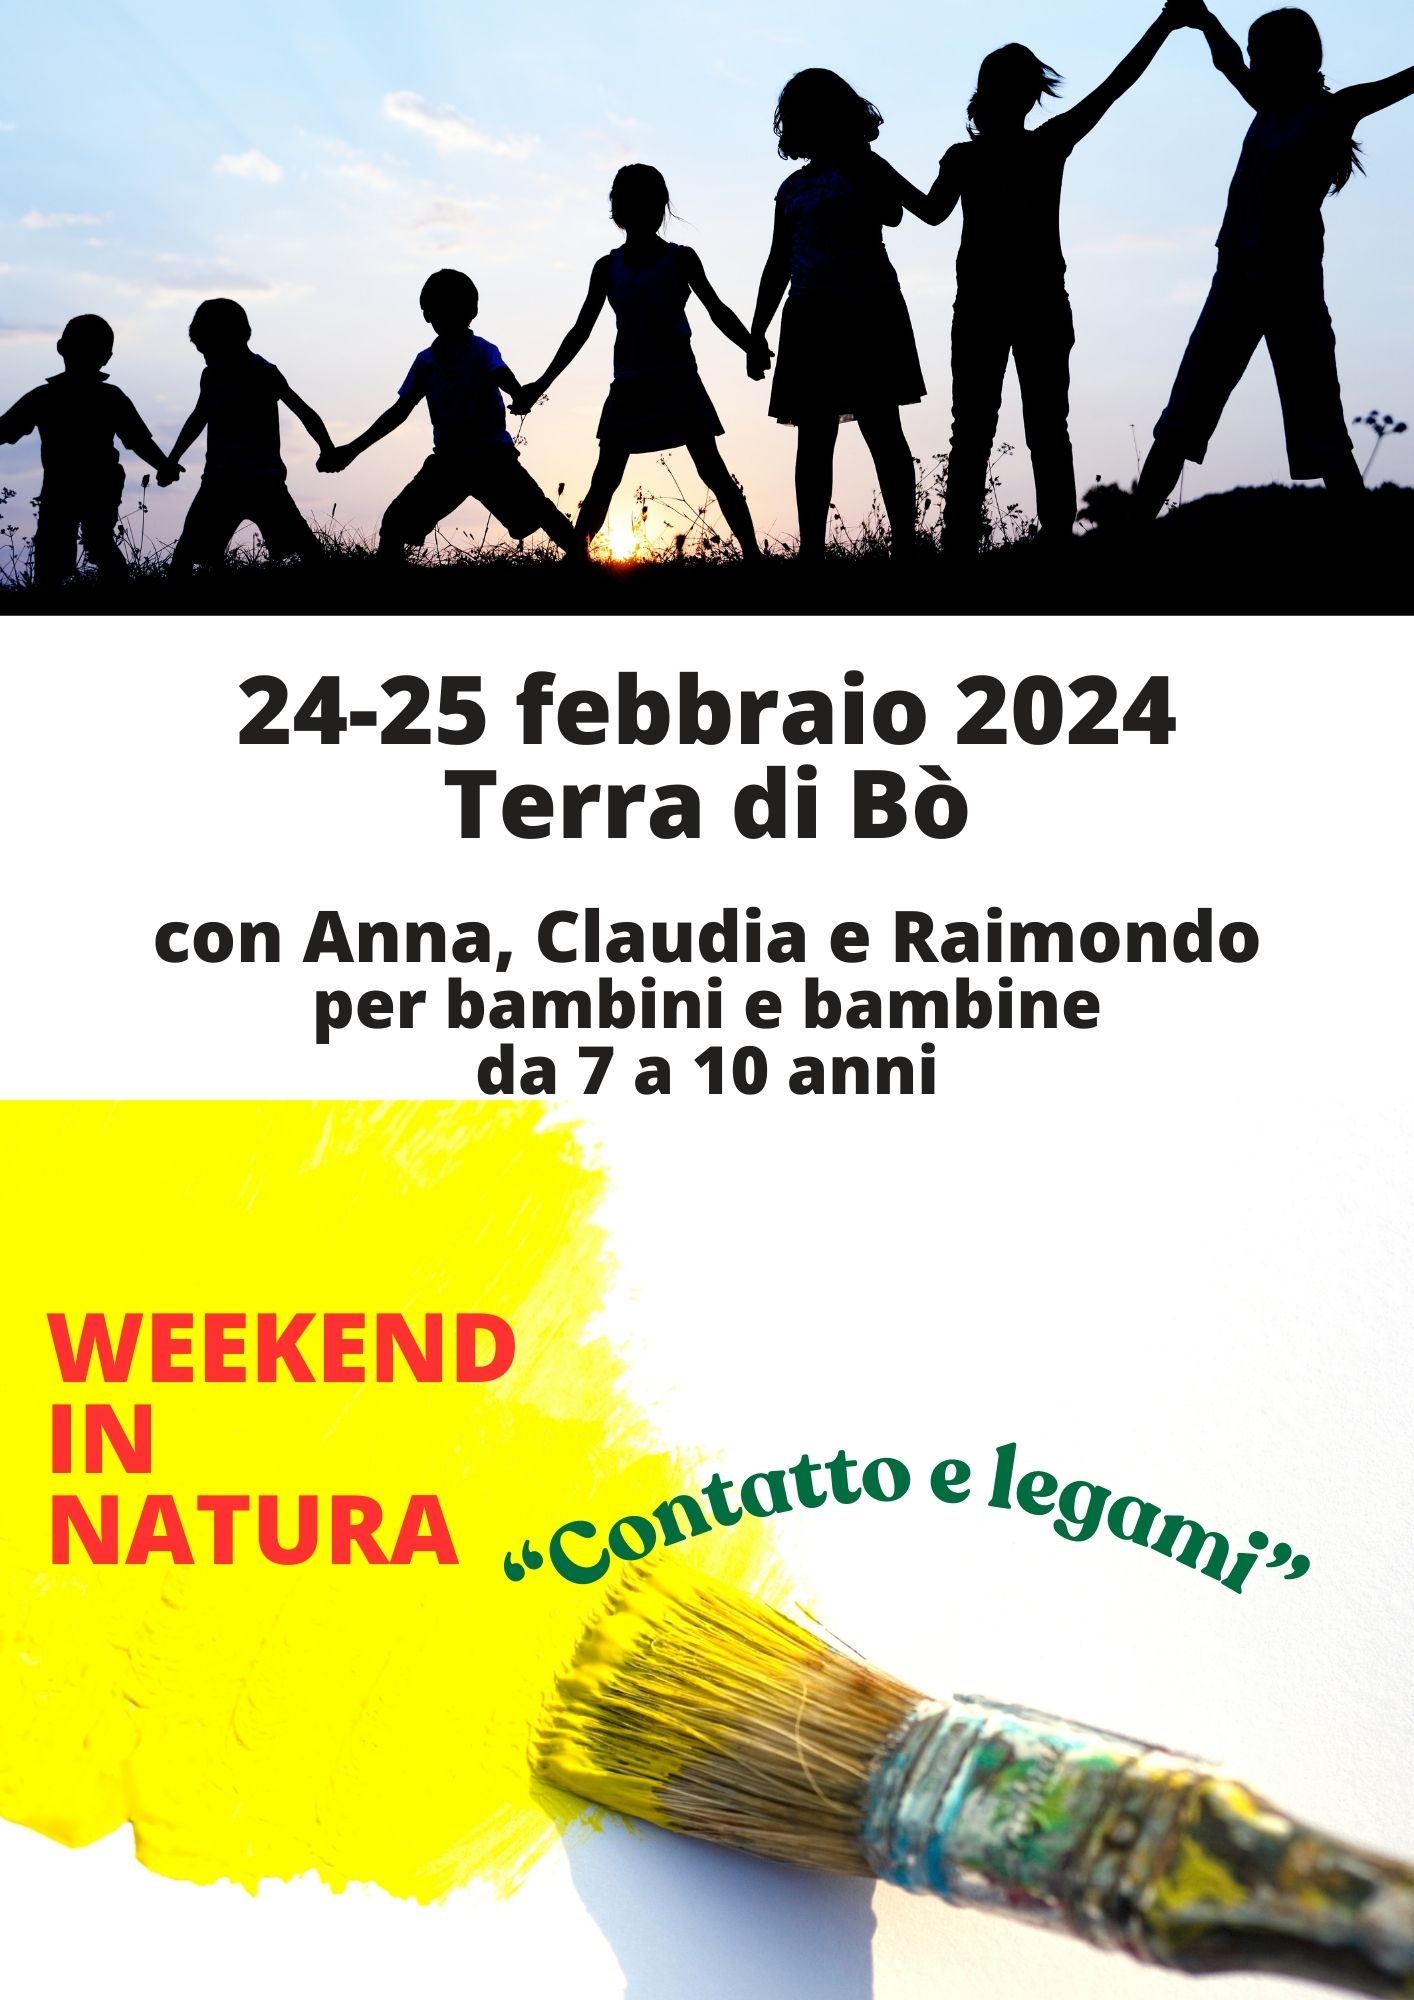 Weekend in natura febbraio 2024